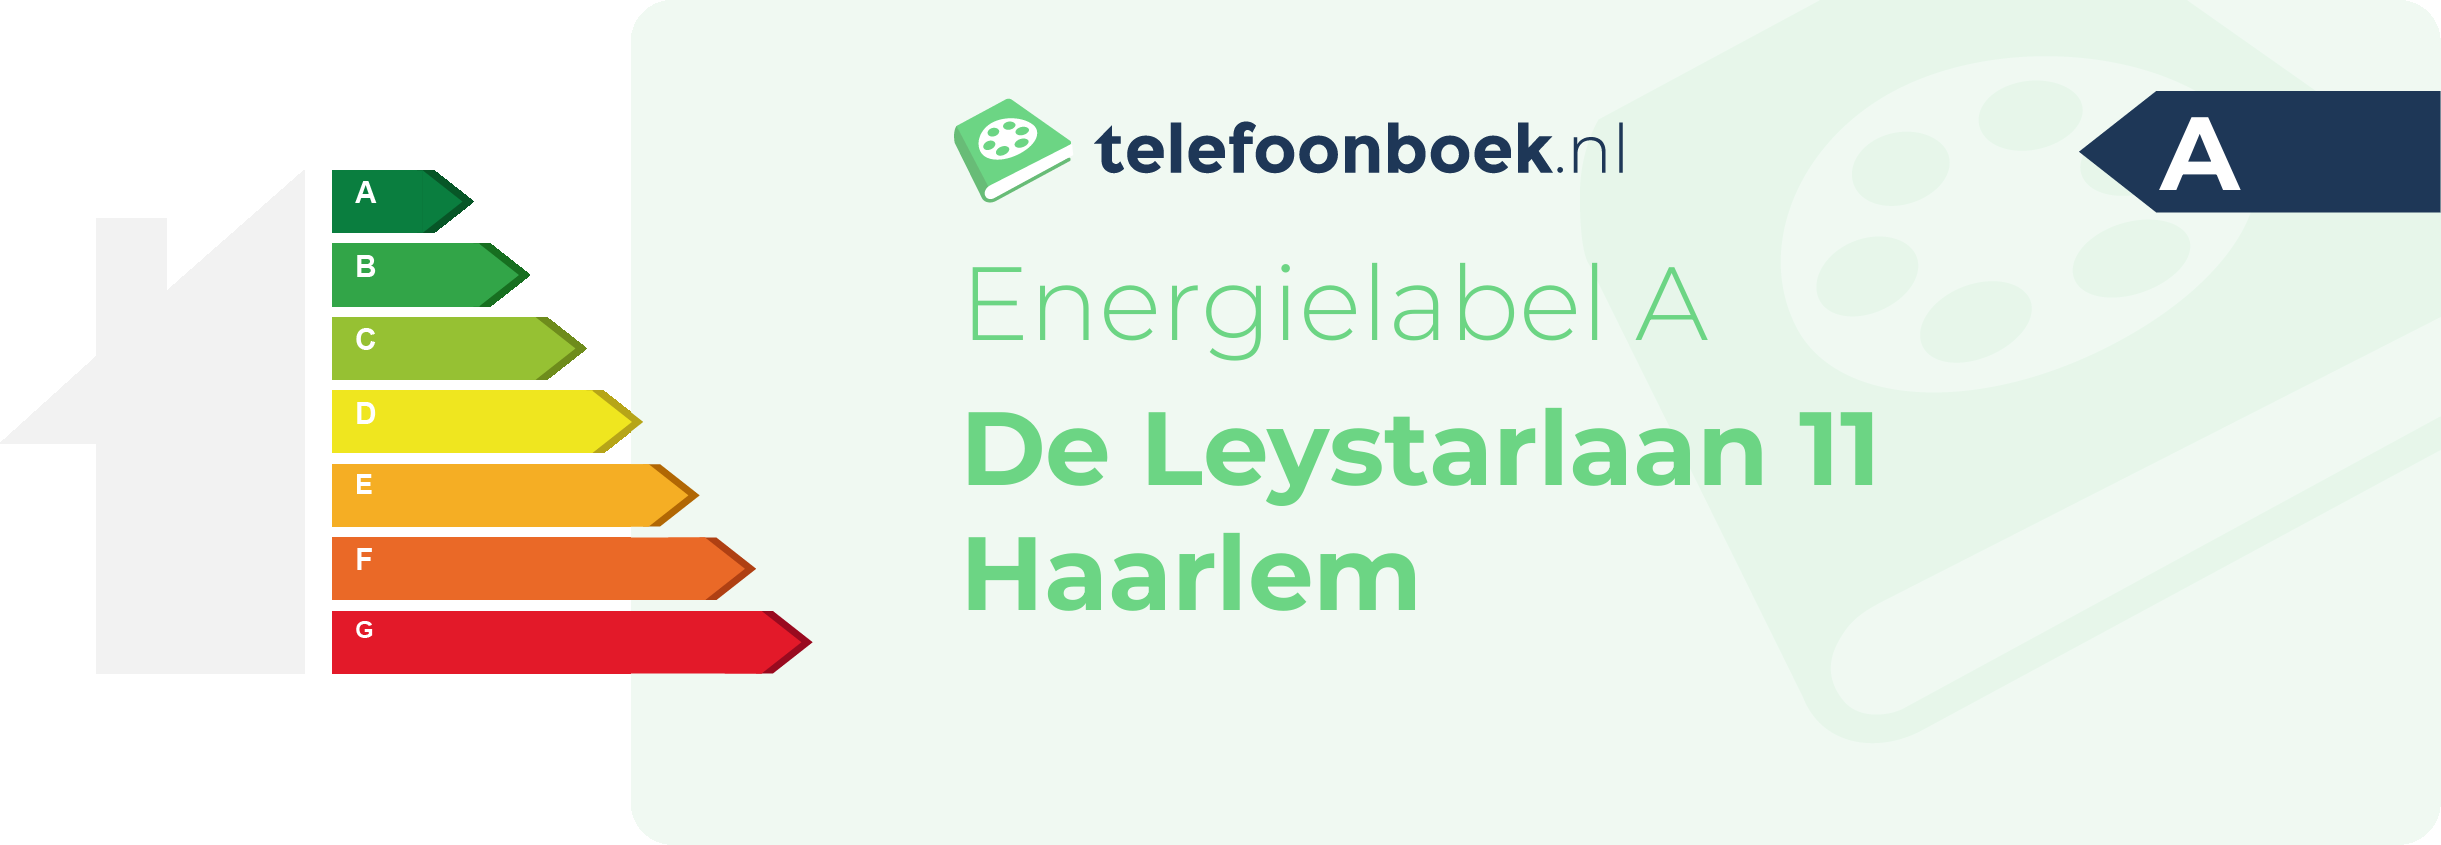 Energielabel De Leystarlaan 11 Haarlem